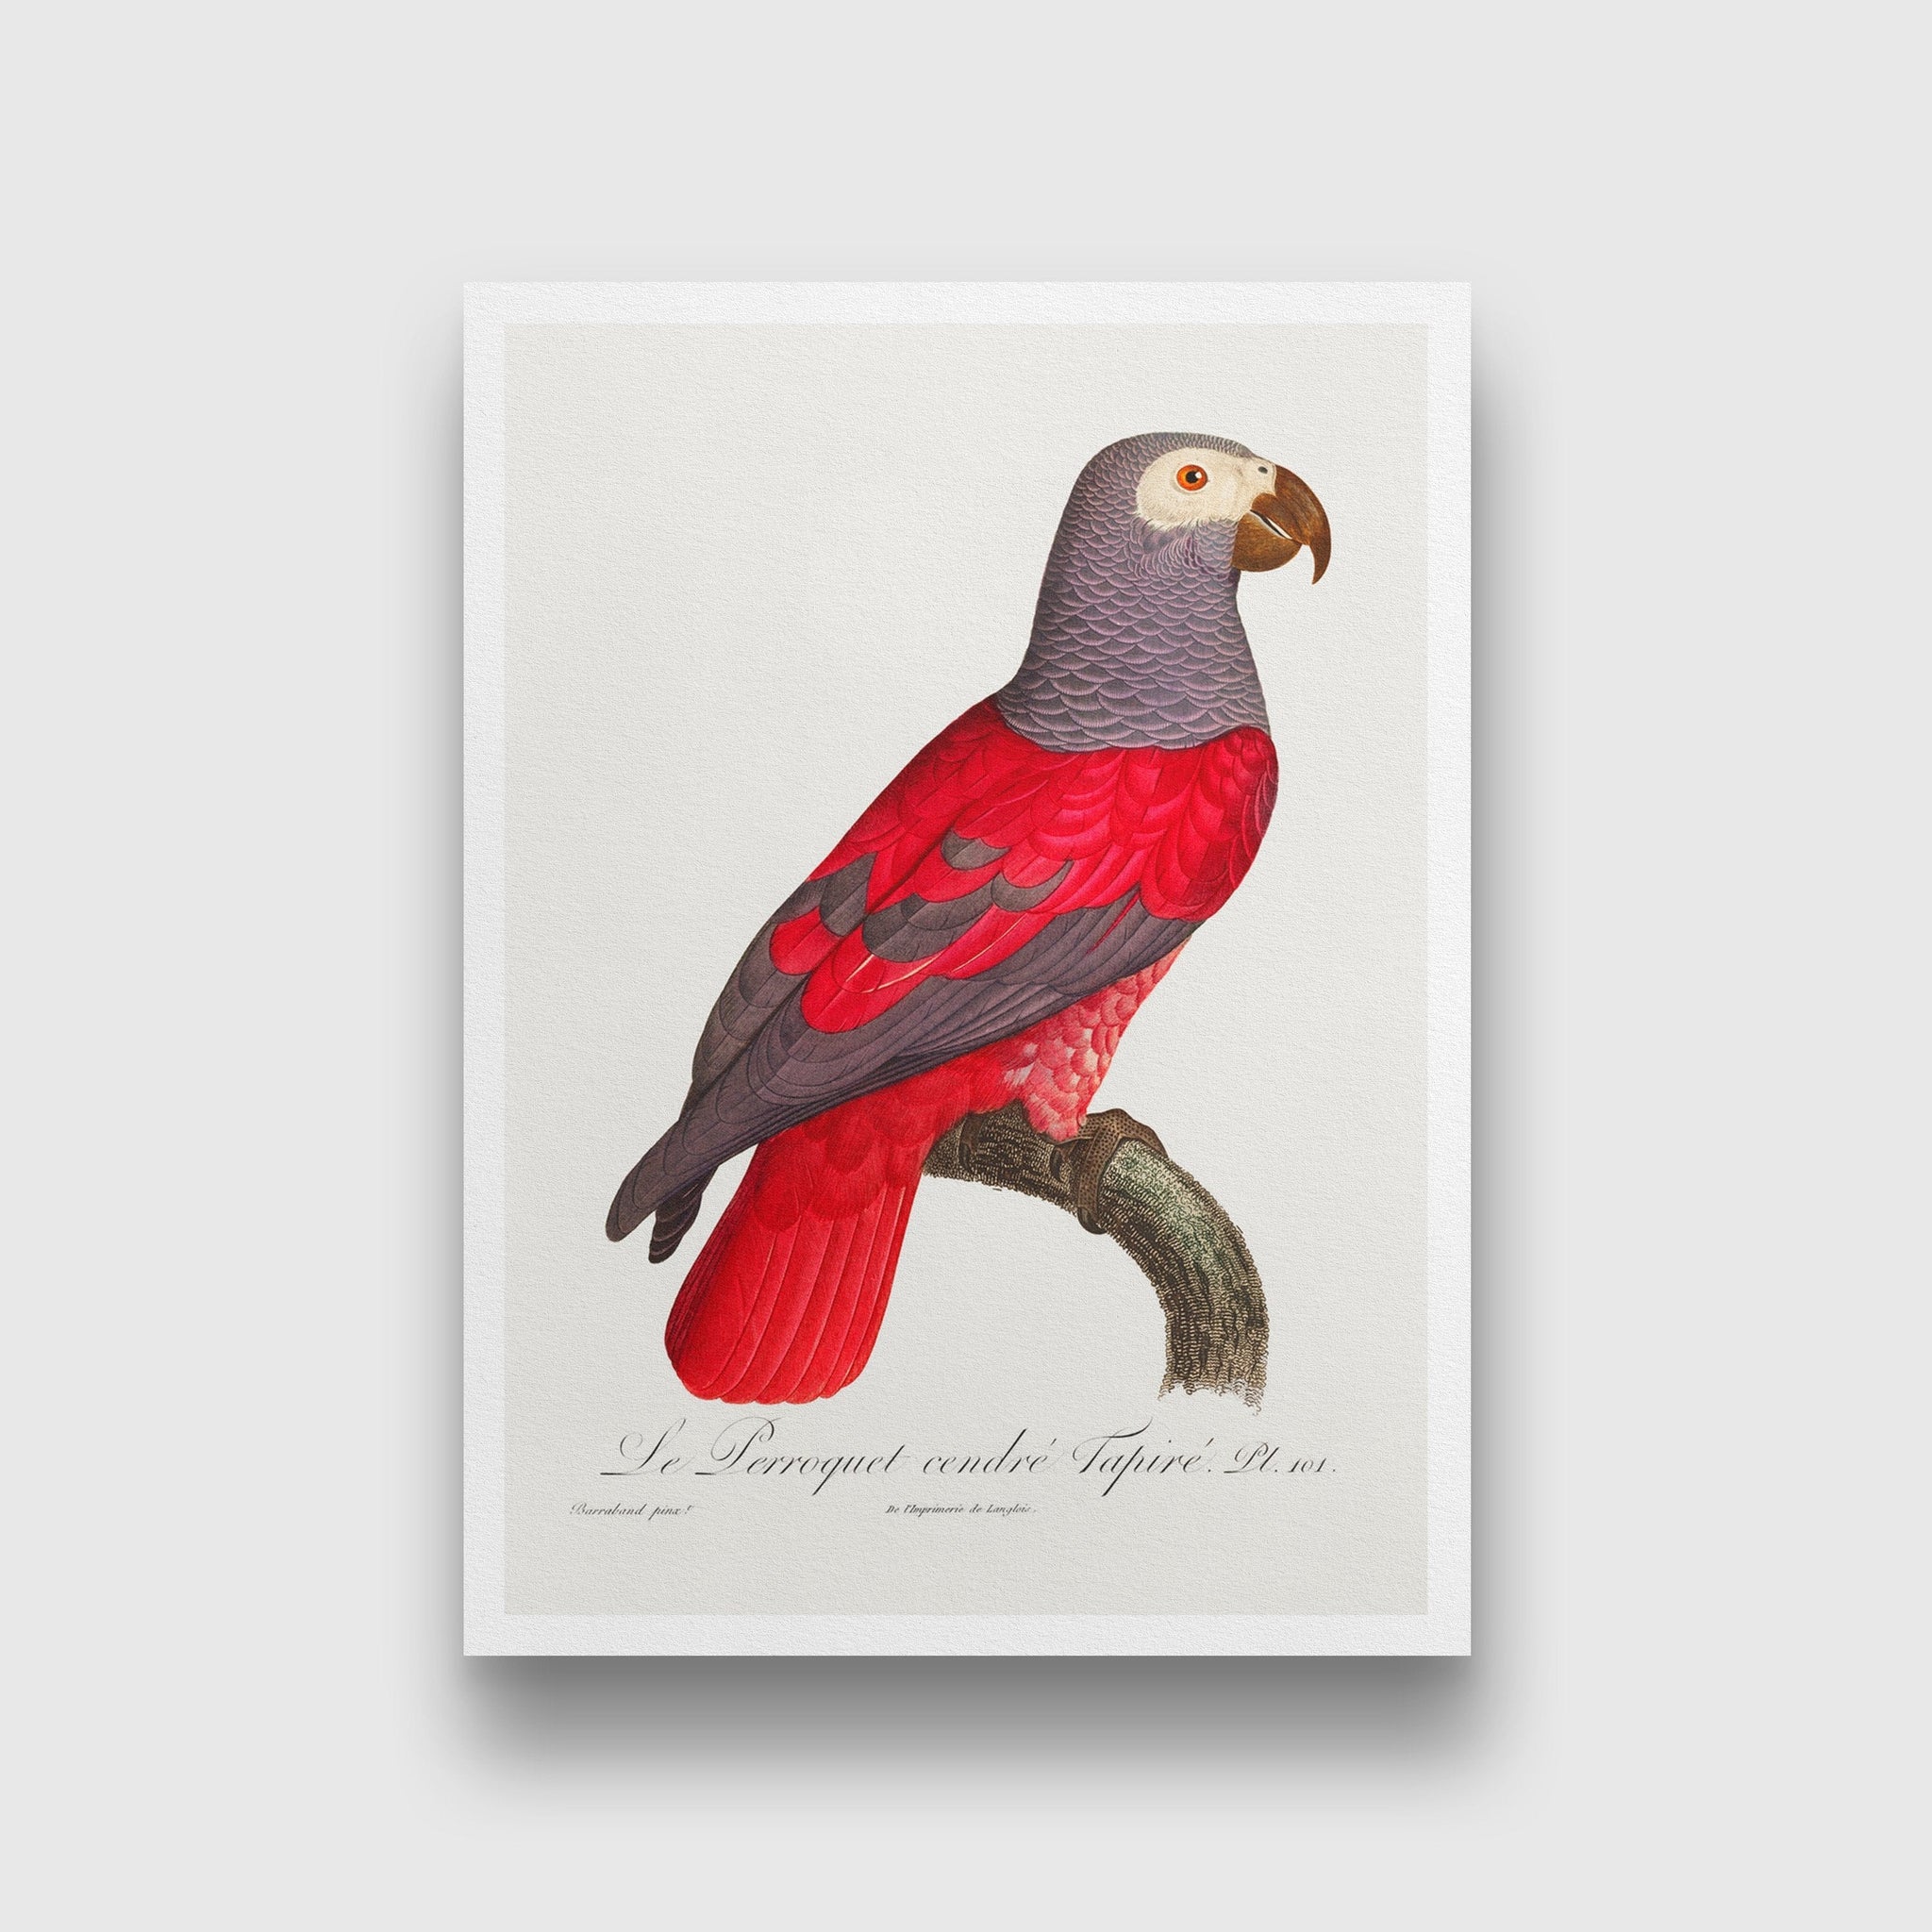 The Grey Parrot Psittacus erithacus Painting - Meri Deewar